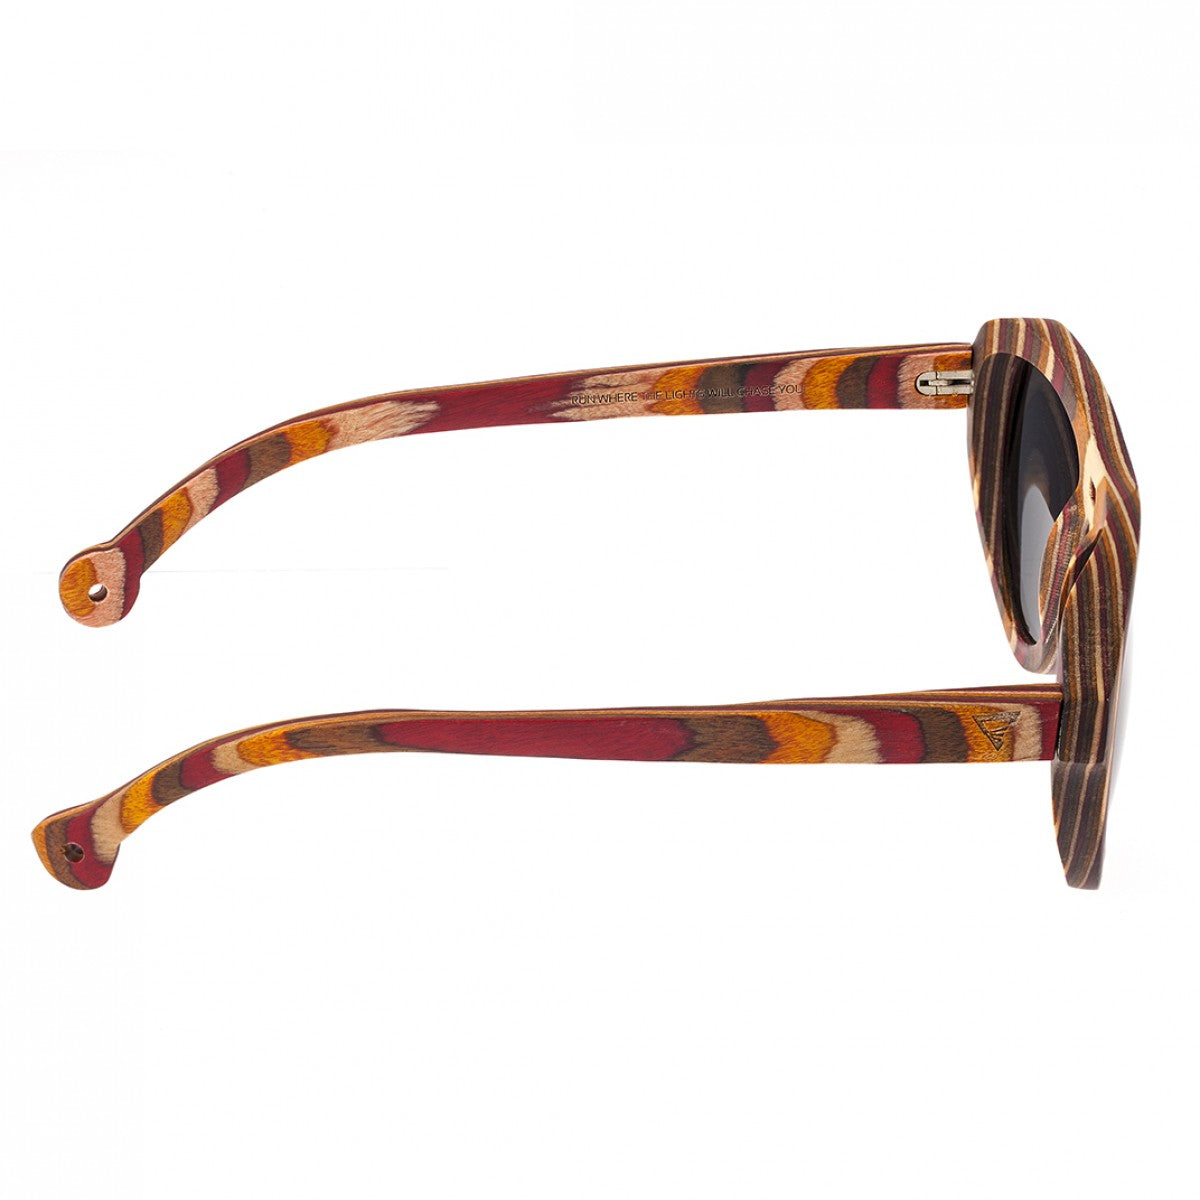 Spectrum Fanning Wood Polarized Sunglasses - Multi/Black - SSGS114BK